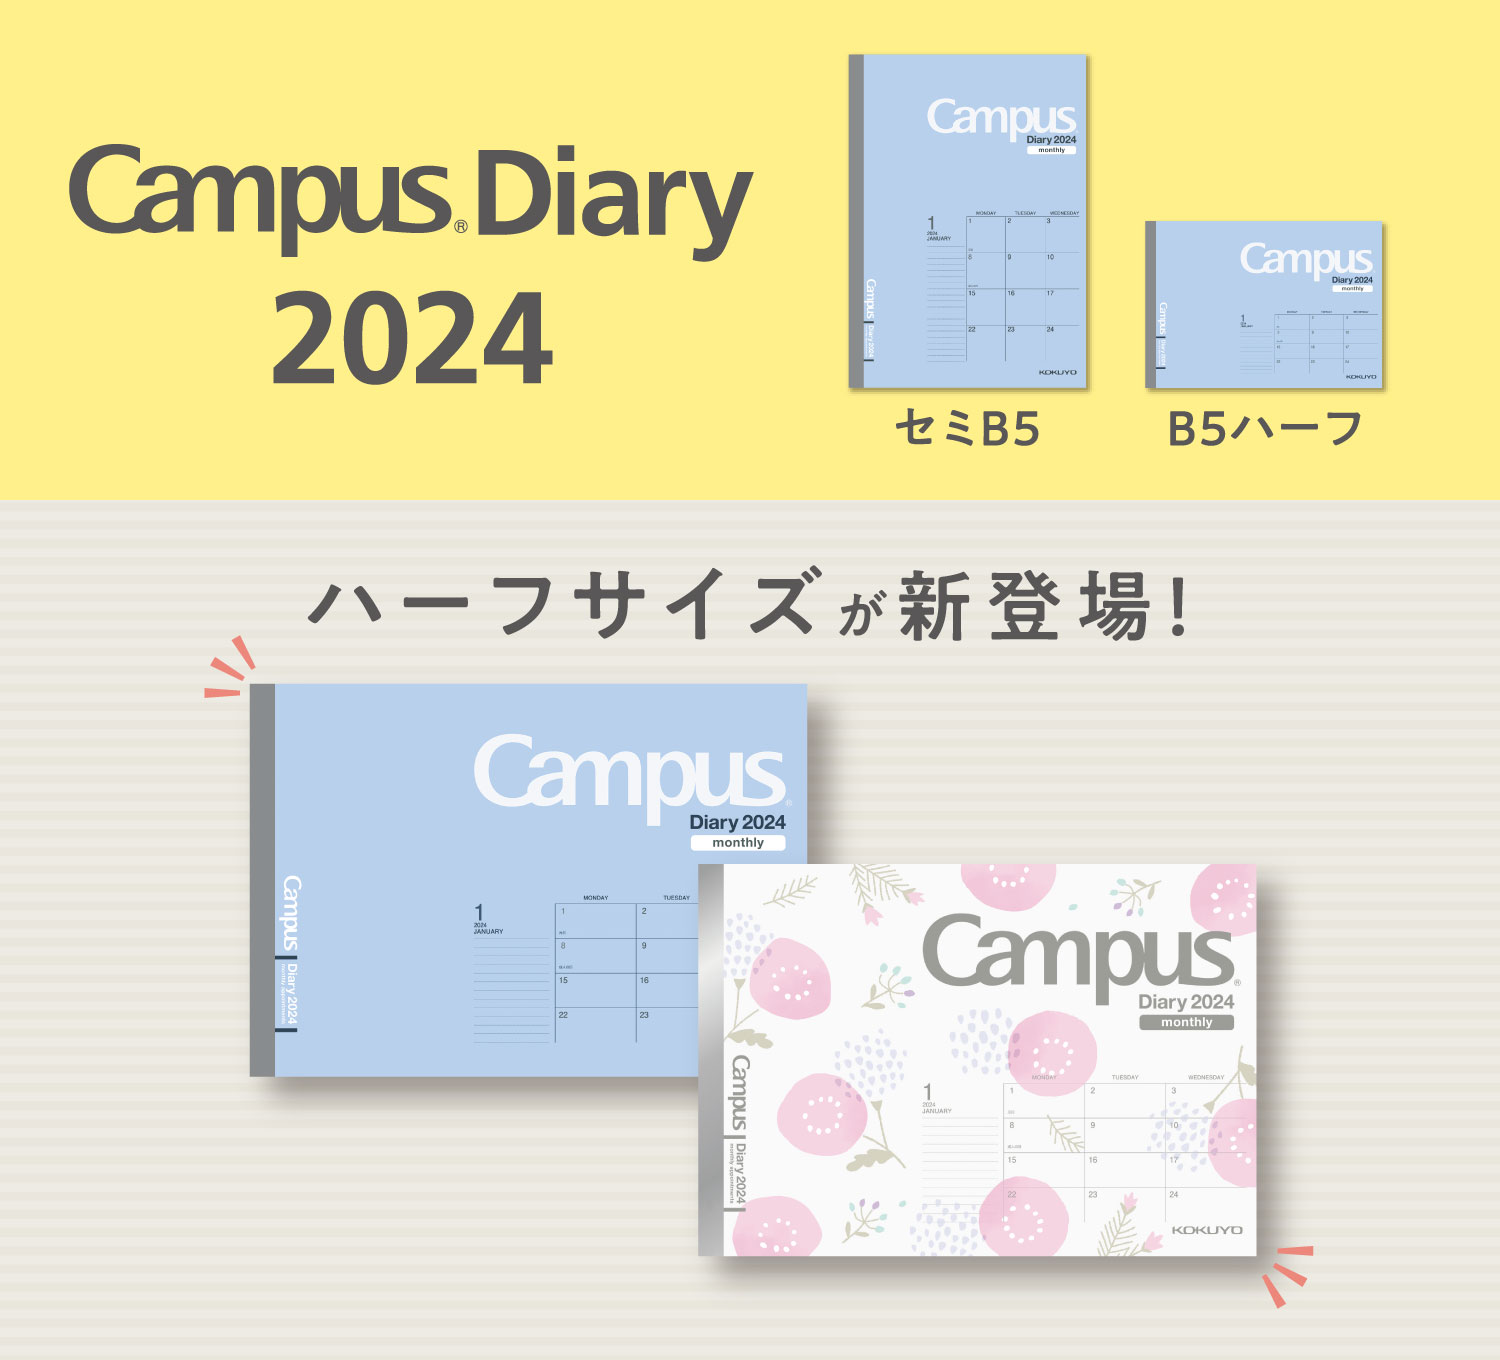 Campus Diary 2024 ハーフサイズが新登場！